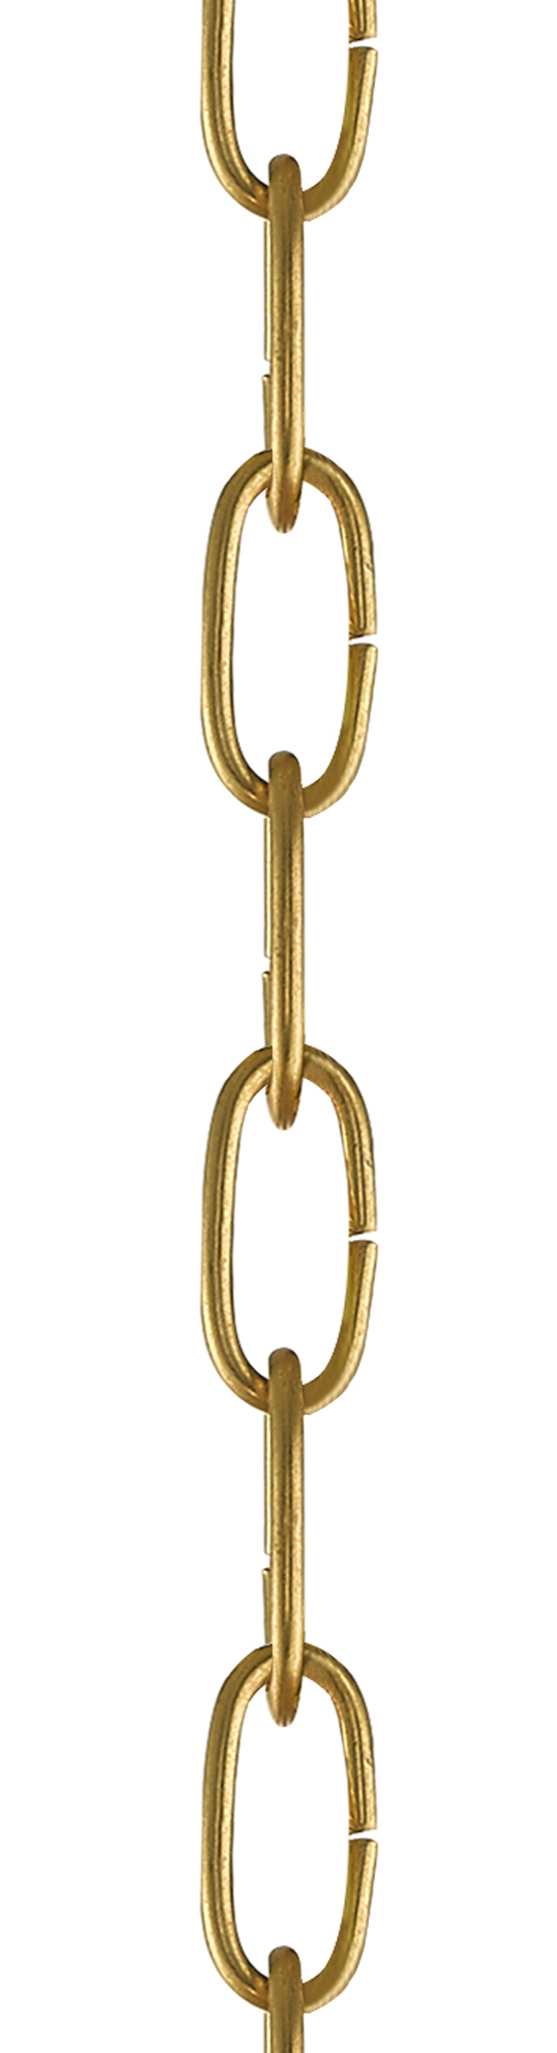 Satin Brass Standard Decorative Chain